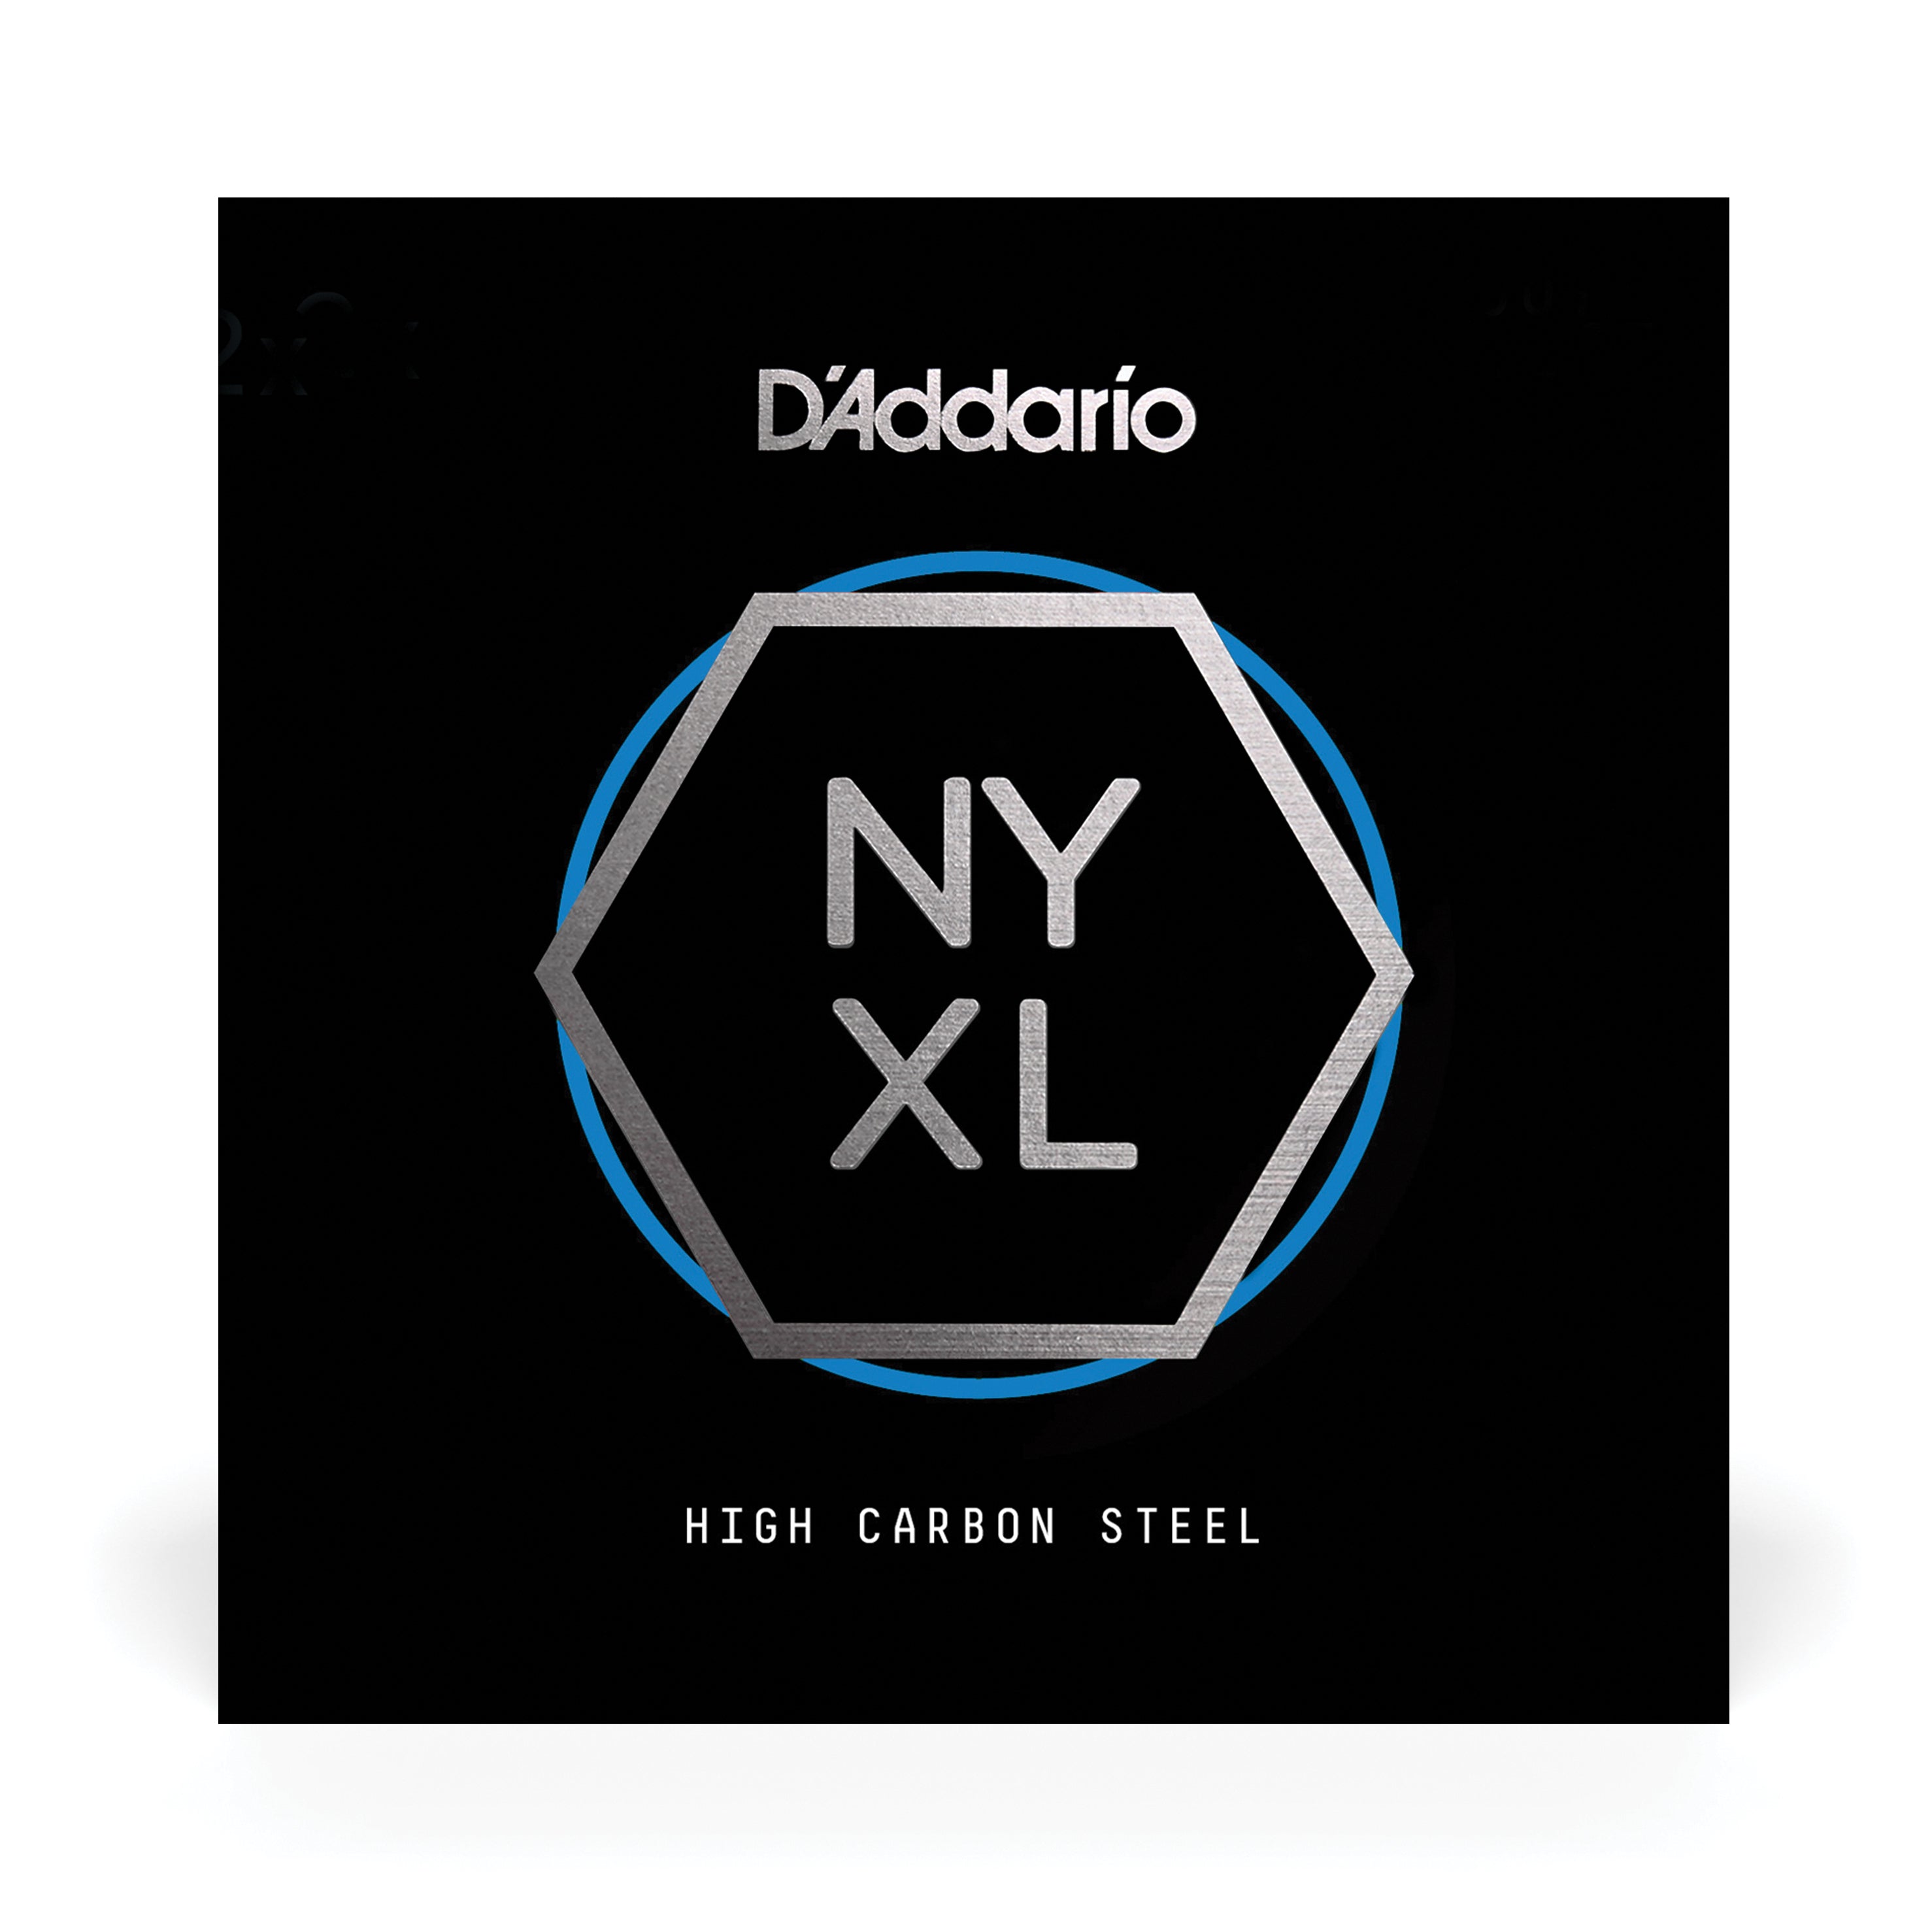 D'Addario NYXL High Carbon Steel .015 Single Guitar String